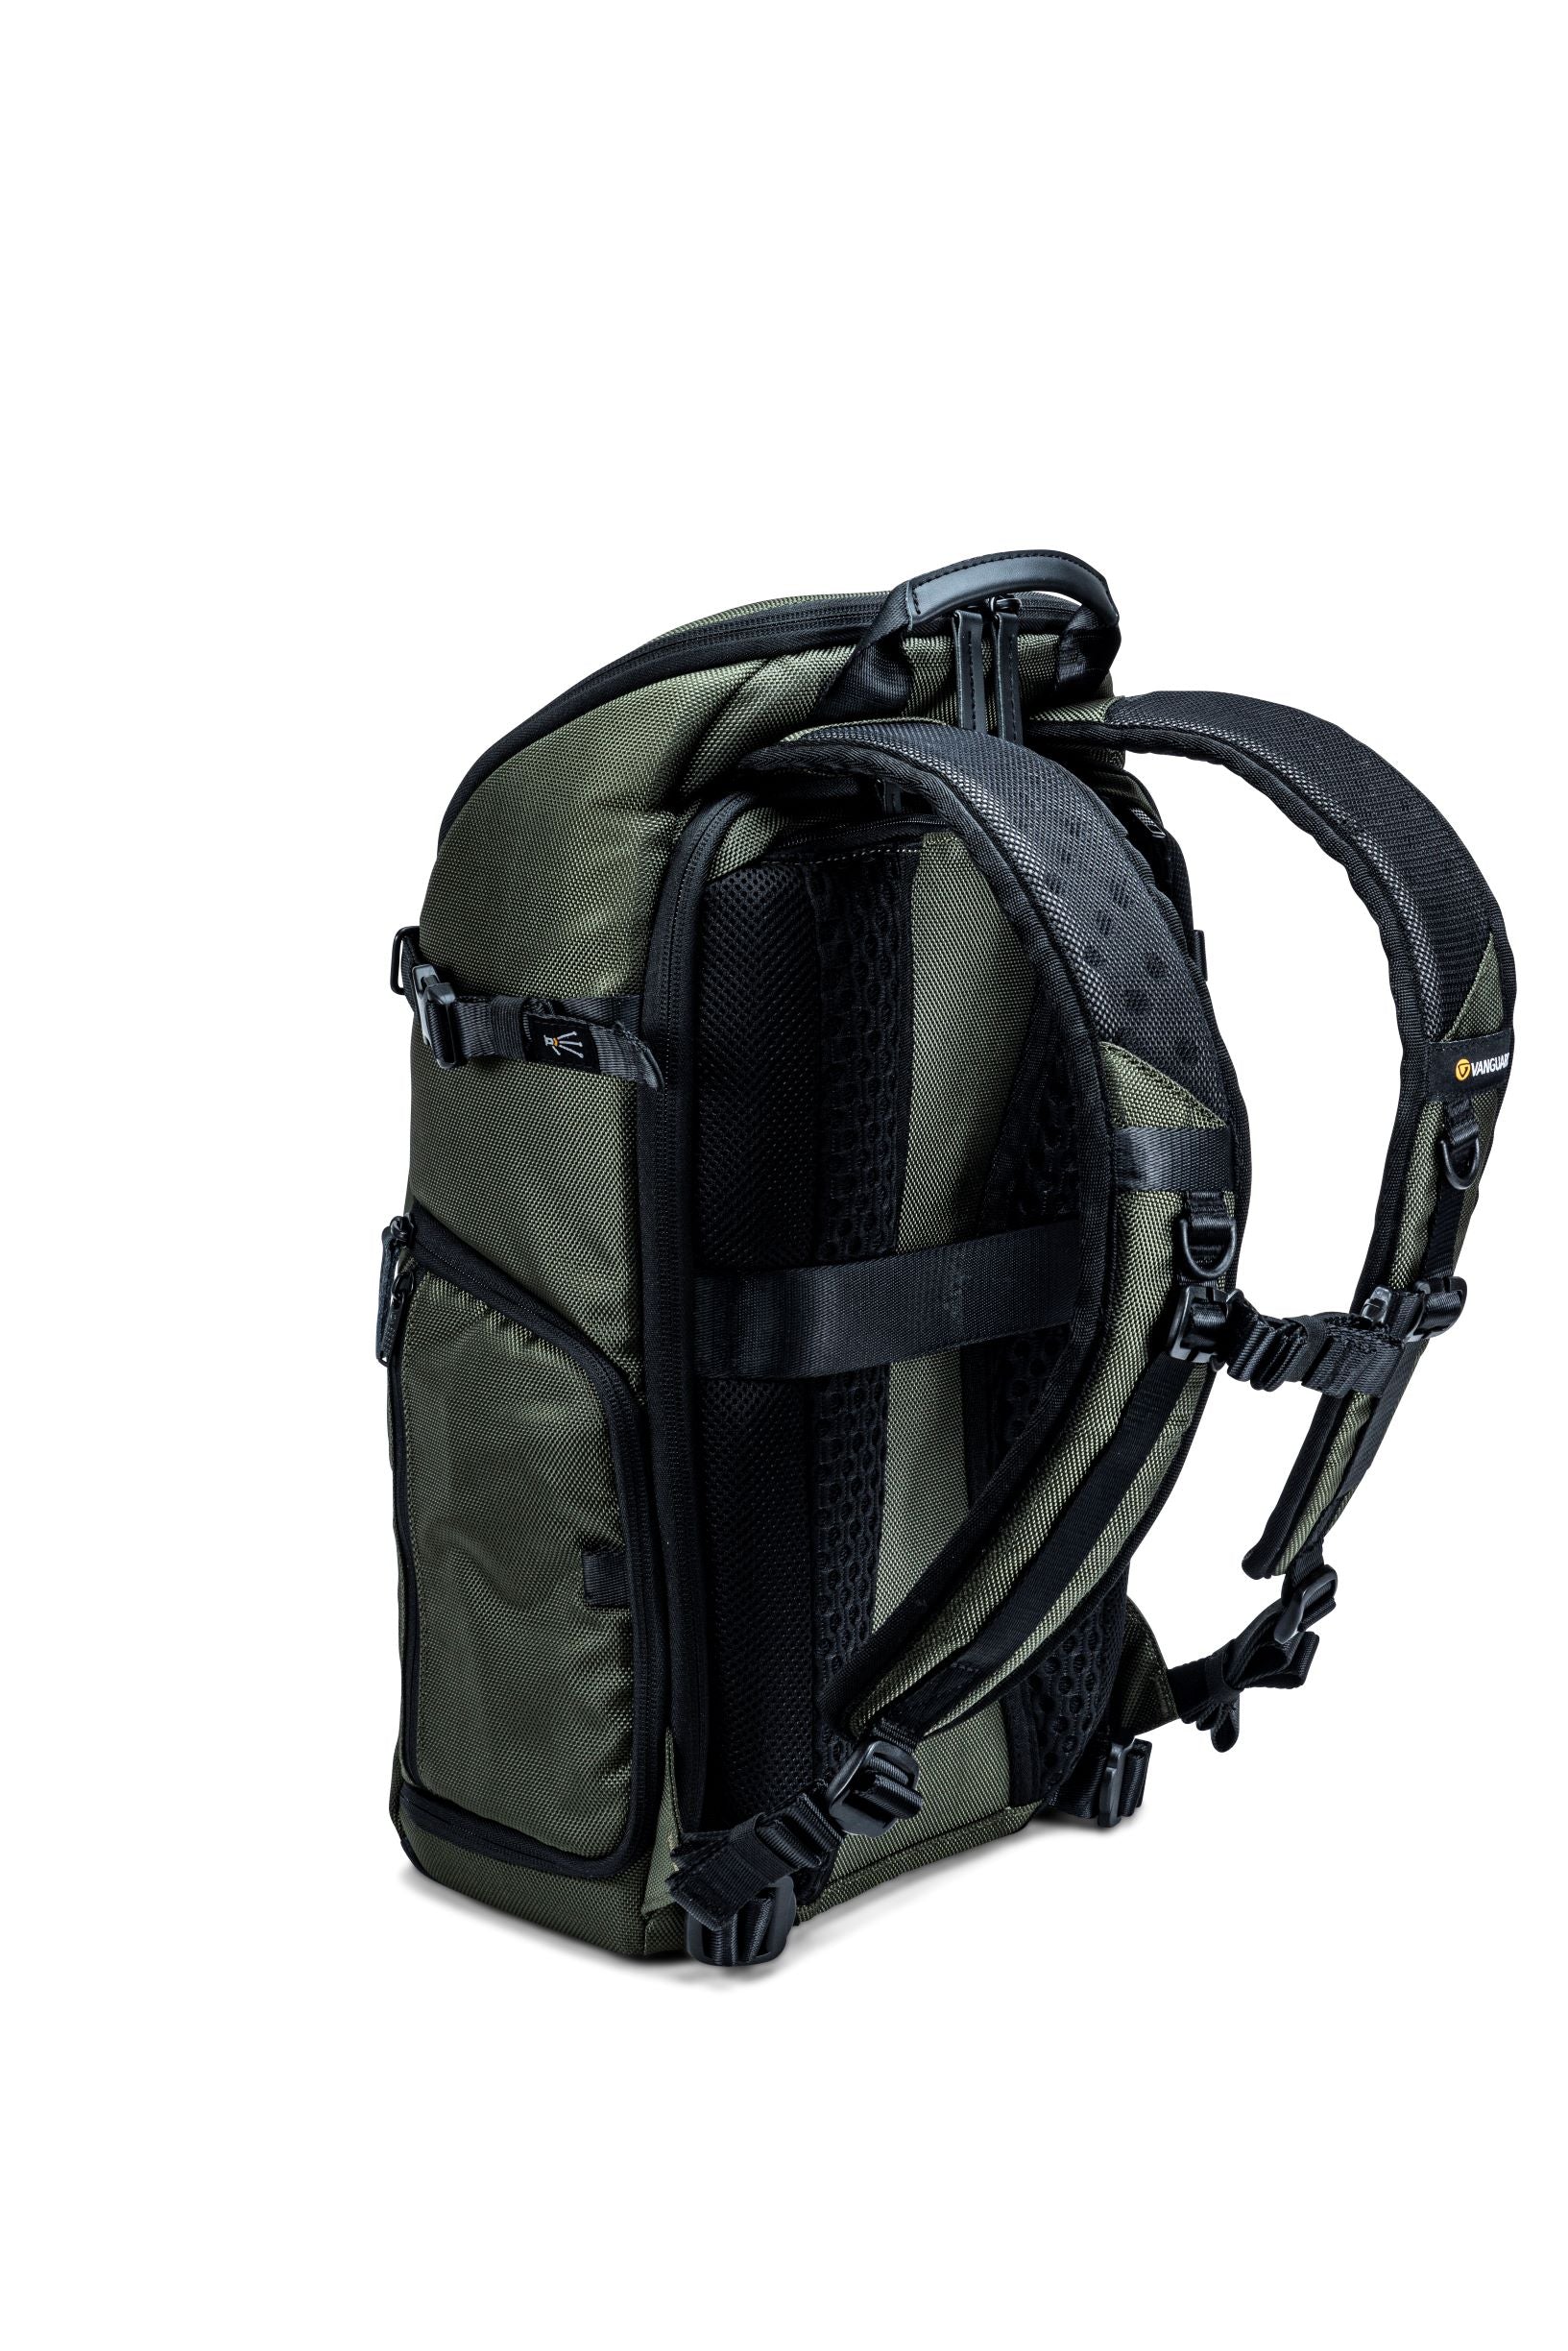 VEO SELECT 46 BR GR Backpack, Green – Vanguard USA